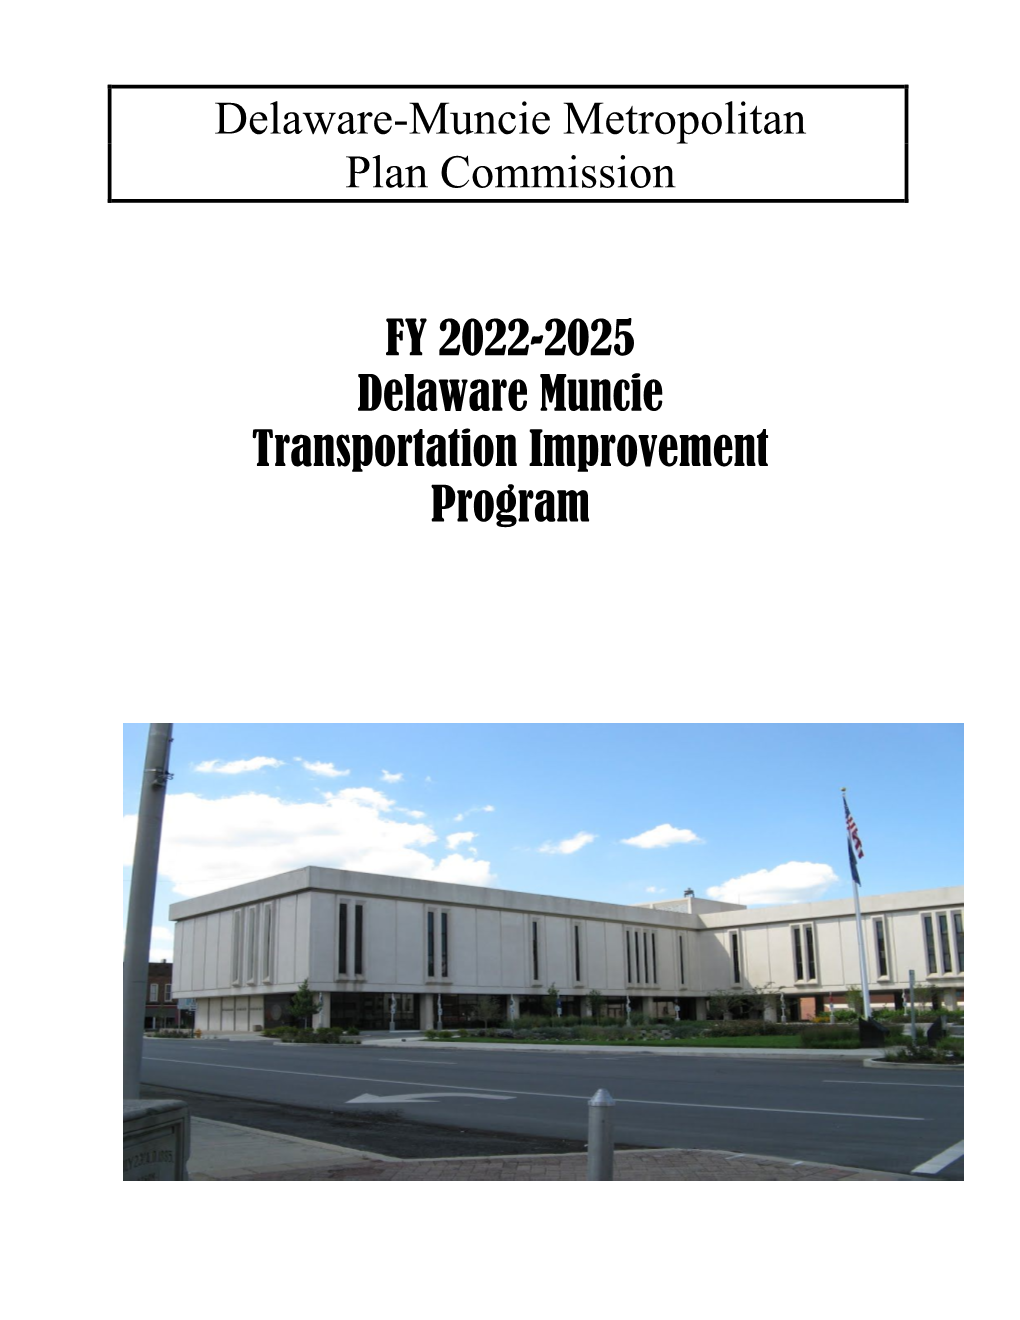 Delaware-Muncie Metropolitan Plan Commission FY 2022-2025